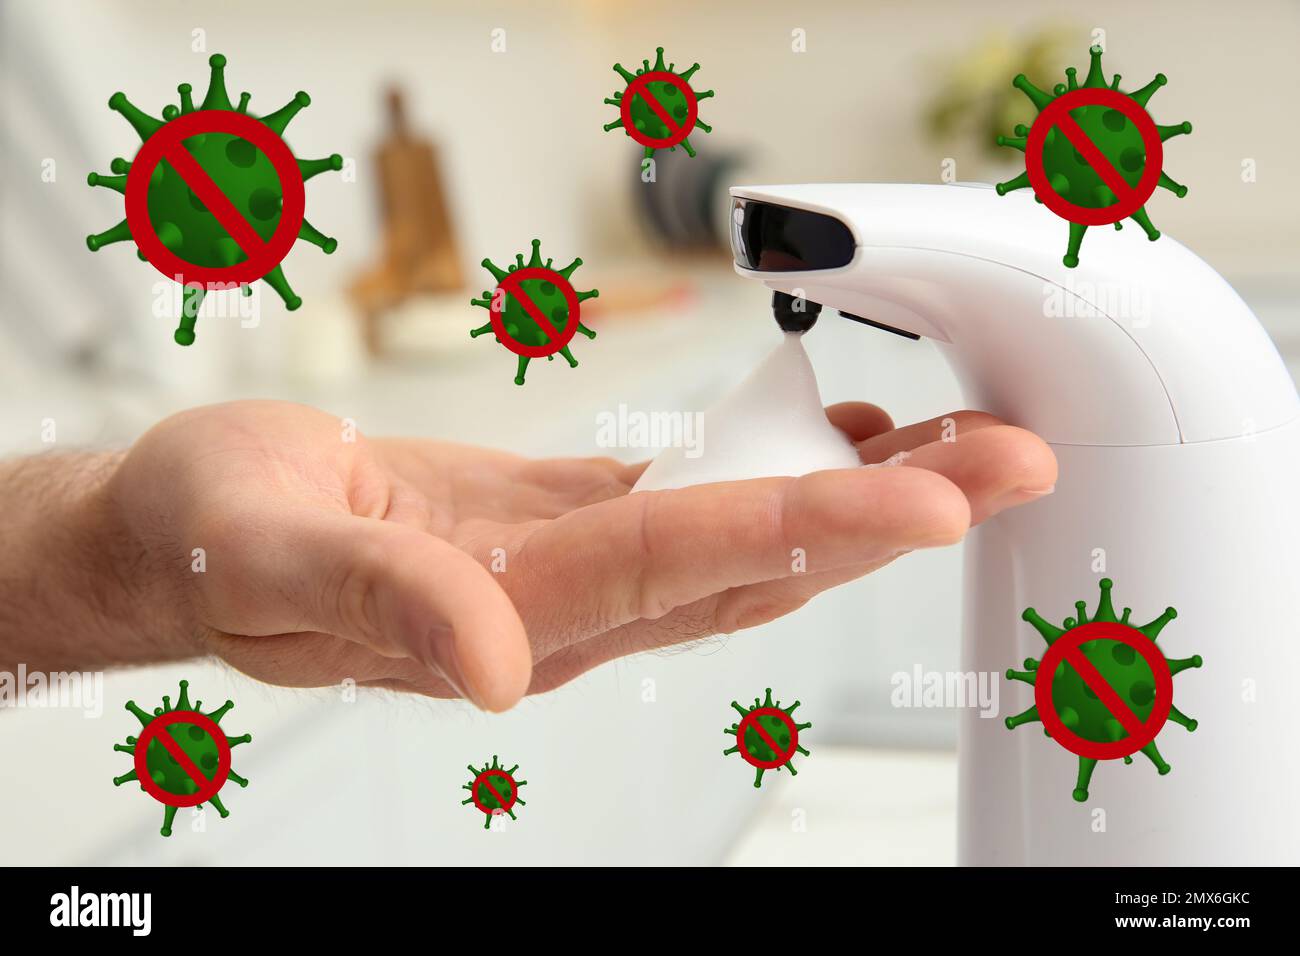 Man using automatic soap dispenser indoors, closeup. Washing hands during coronavirus outbreak Stock Photo